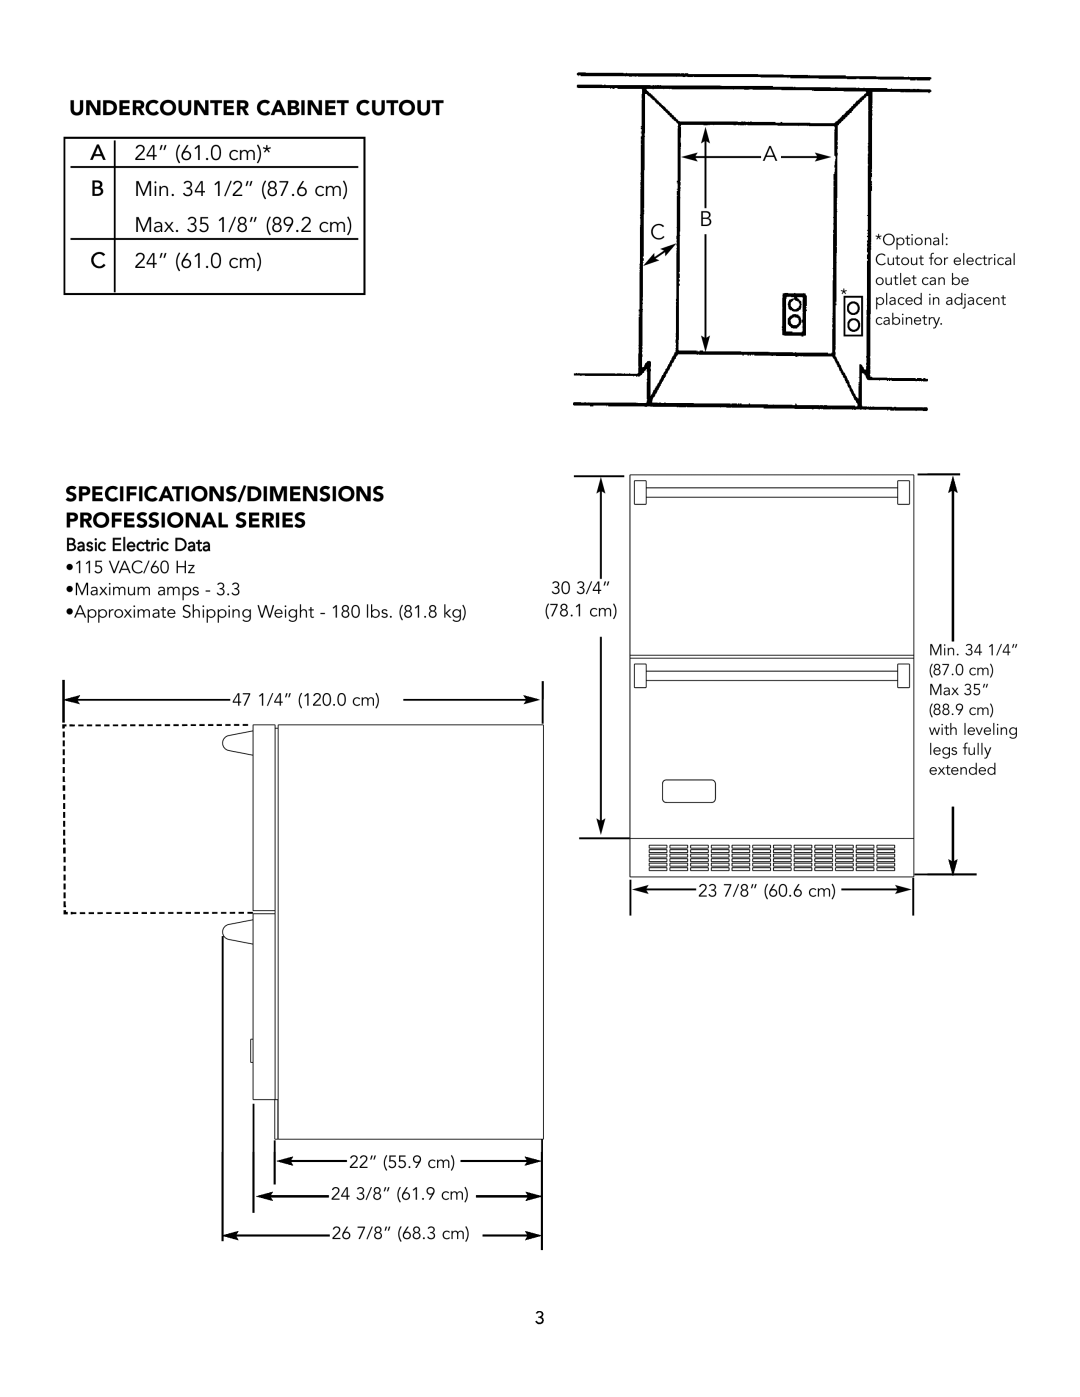 Viking Refrigerator Drawer manual Undercounter Cabinet Cutout, A 24” 61.0 cm B Min. 34 1/2” 87.6 cm Max. 35 1/8” 89.2 cm 